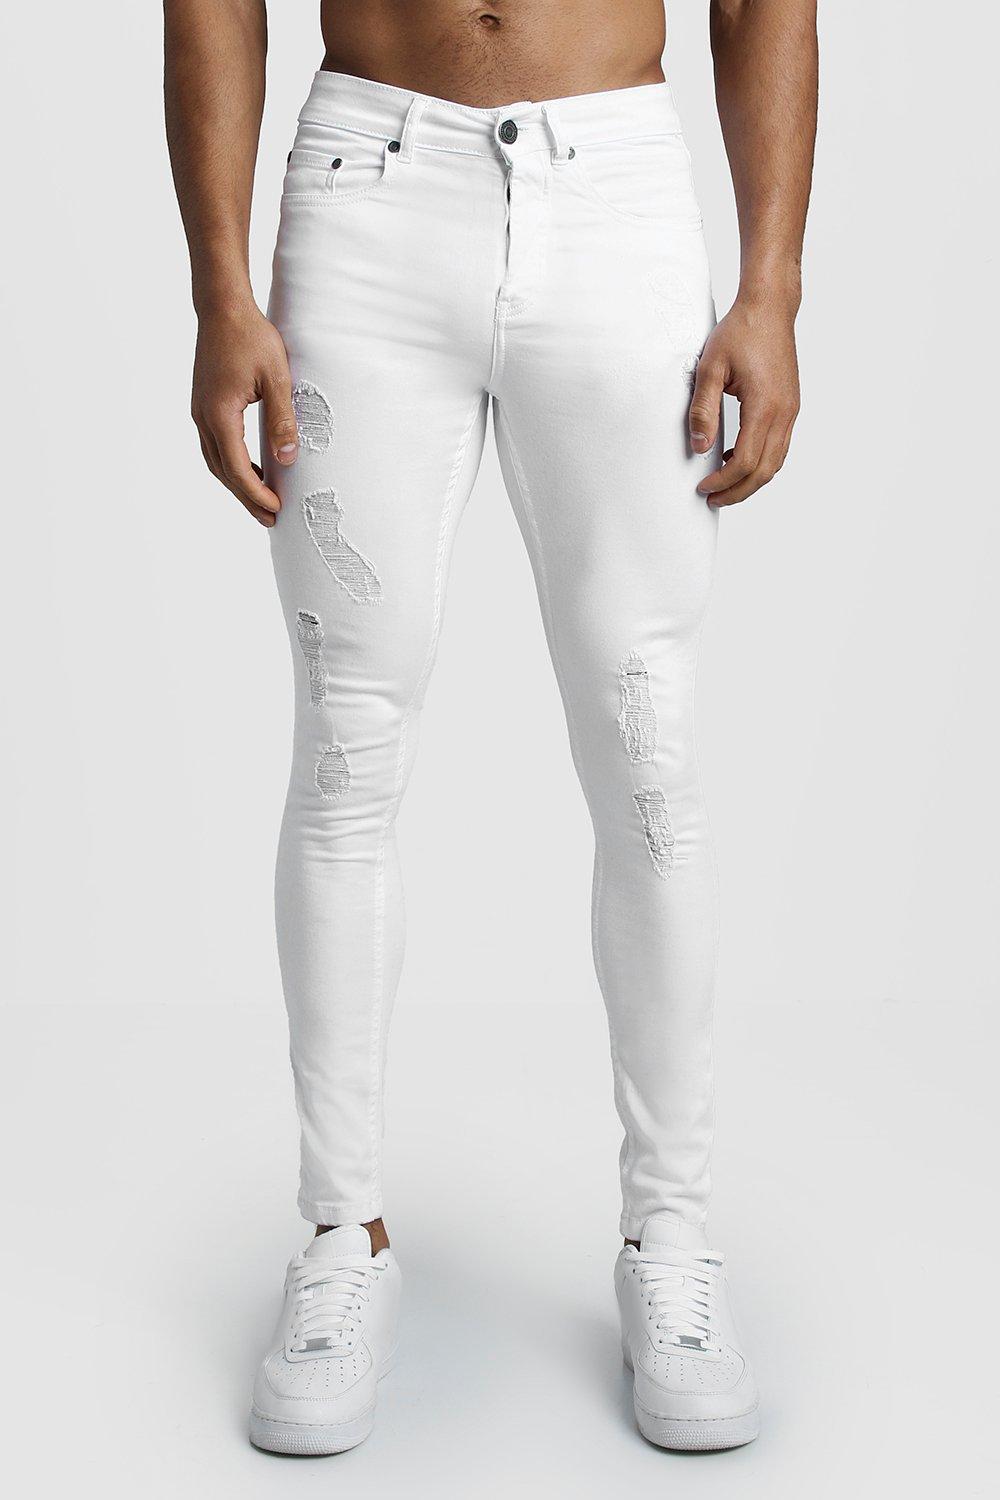 white skinny jeans mens near me